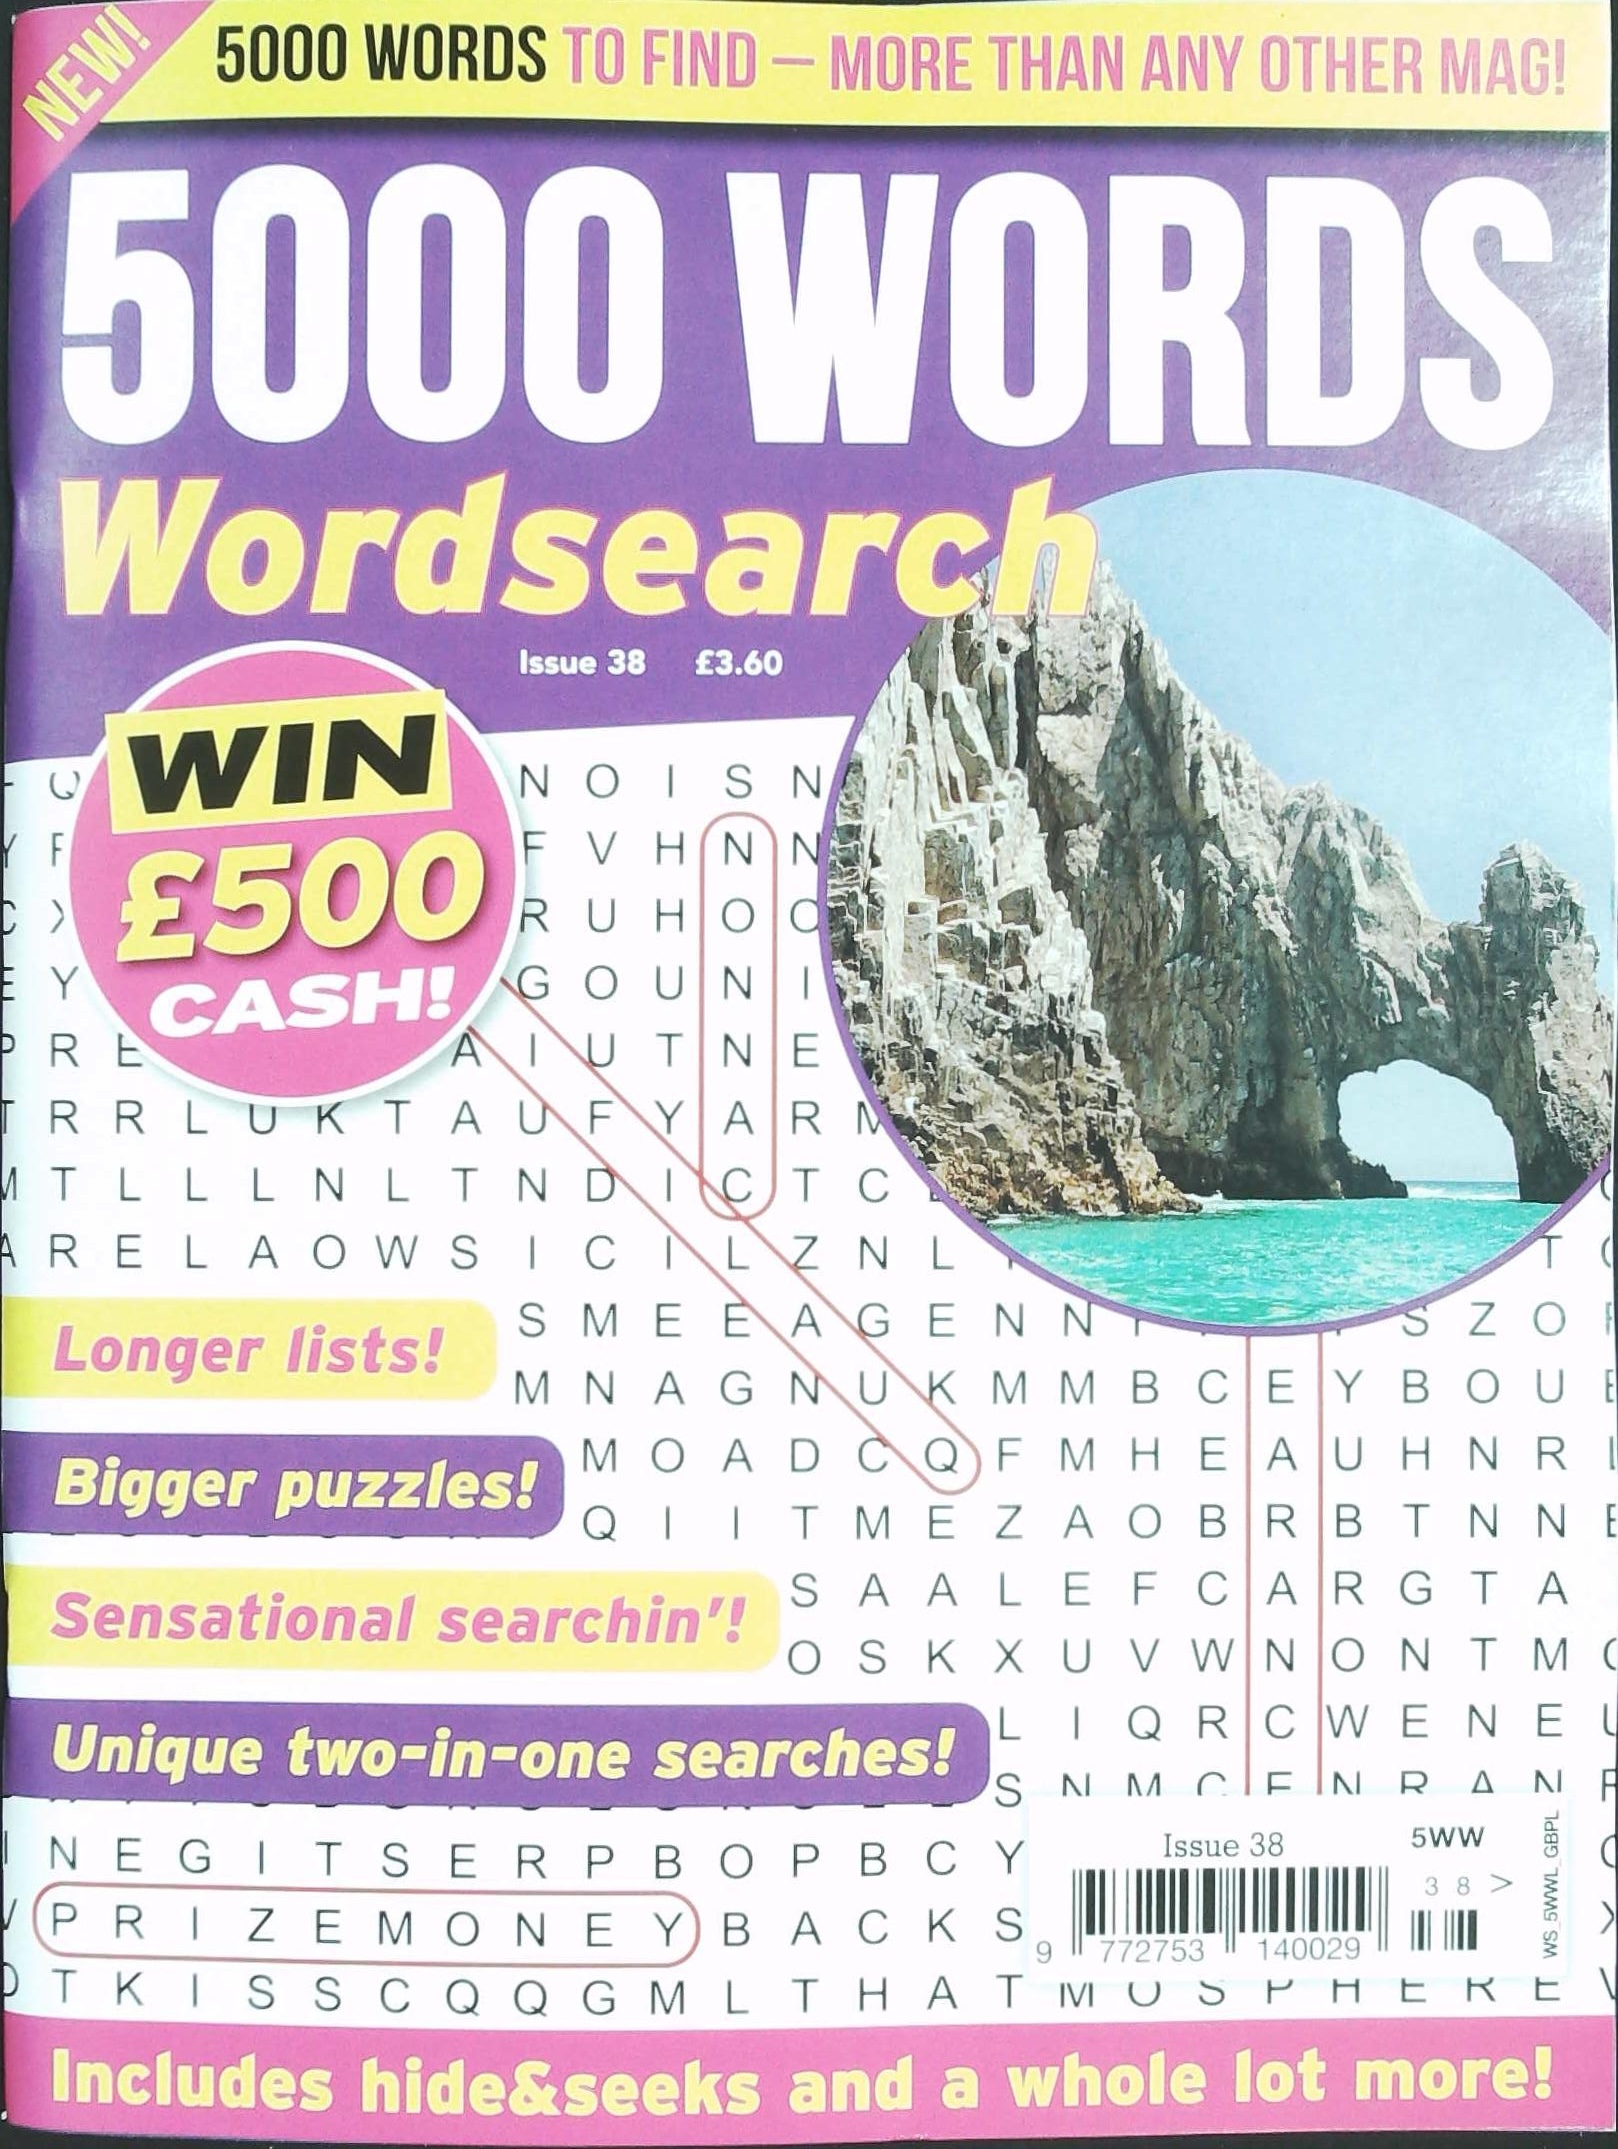 5000 WORDS